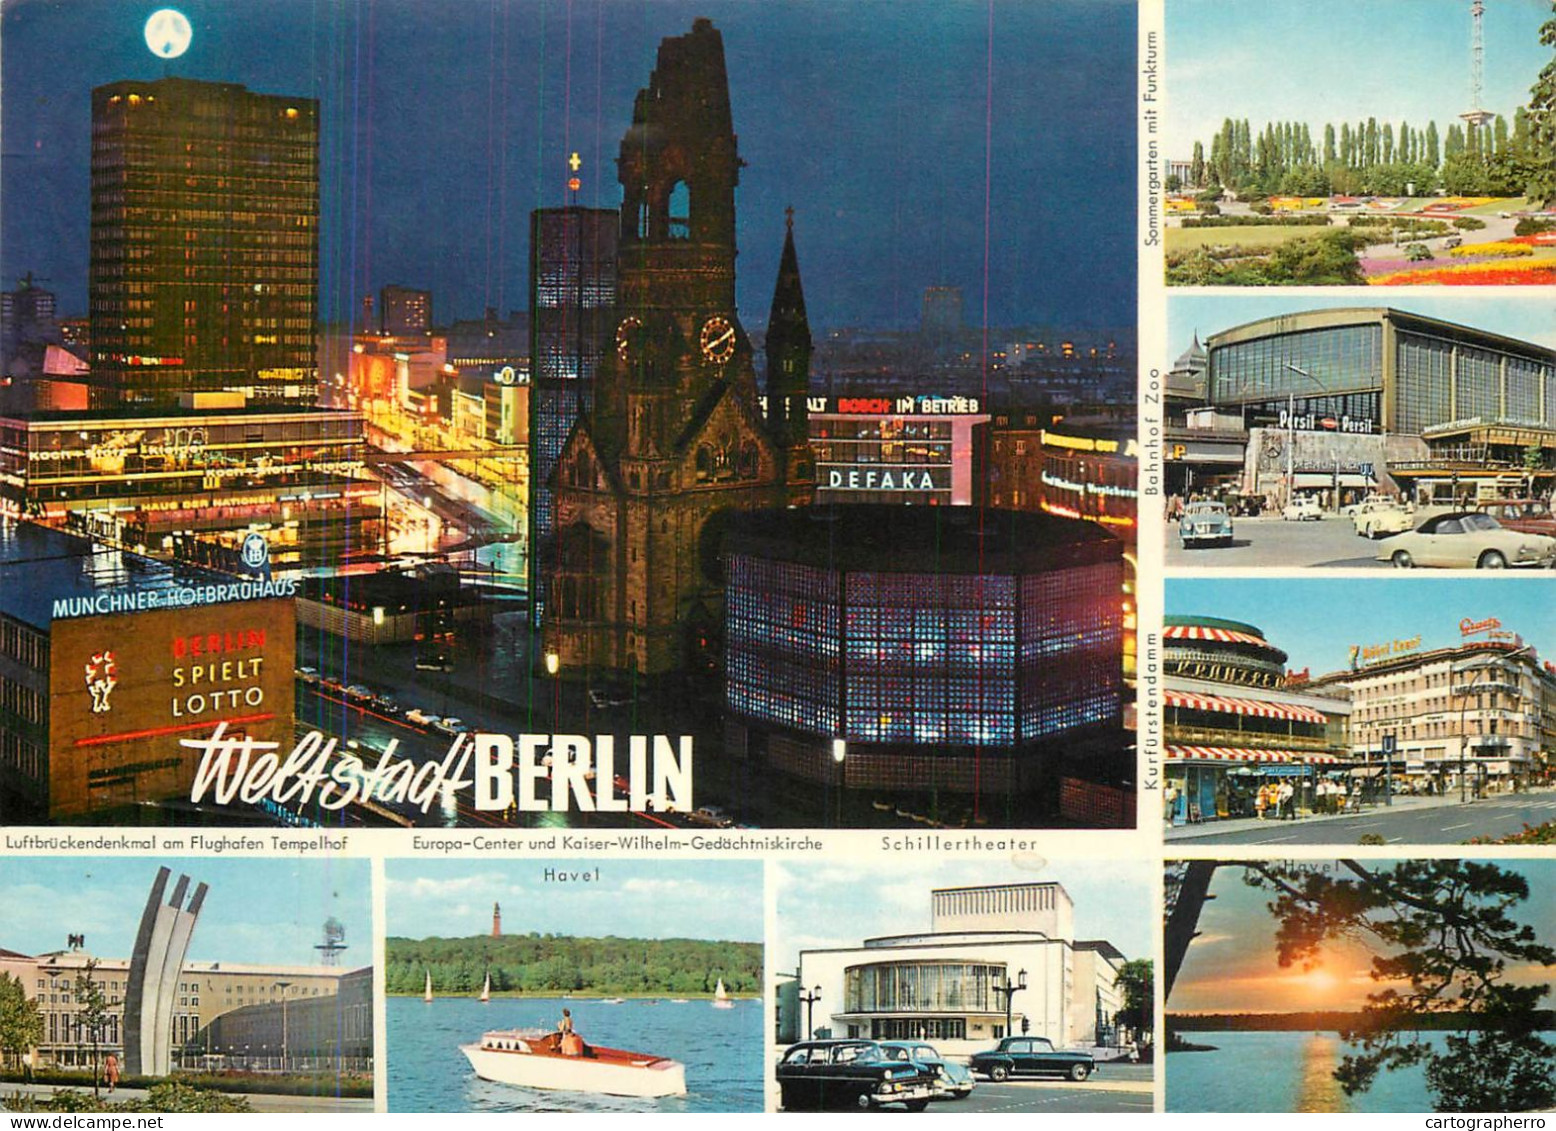 Navigation Sailing Vessels & Boats Themed Postcard Germany Berlin Pleasure Cruise - Sailing Vessels